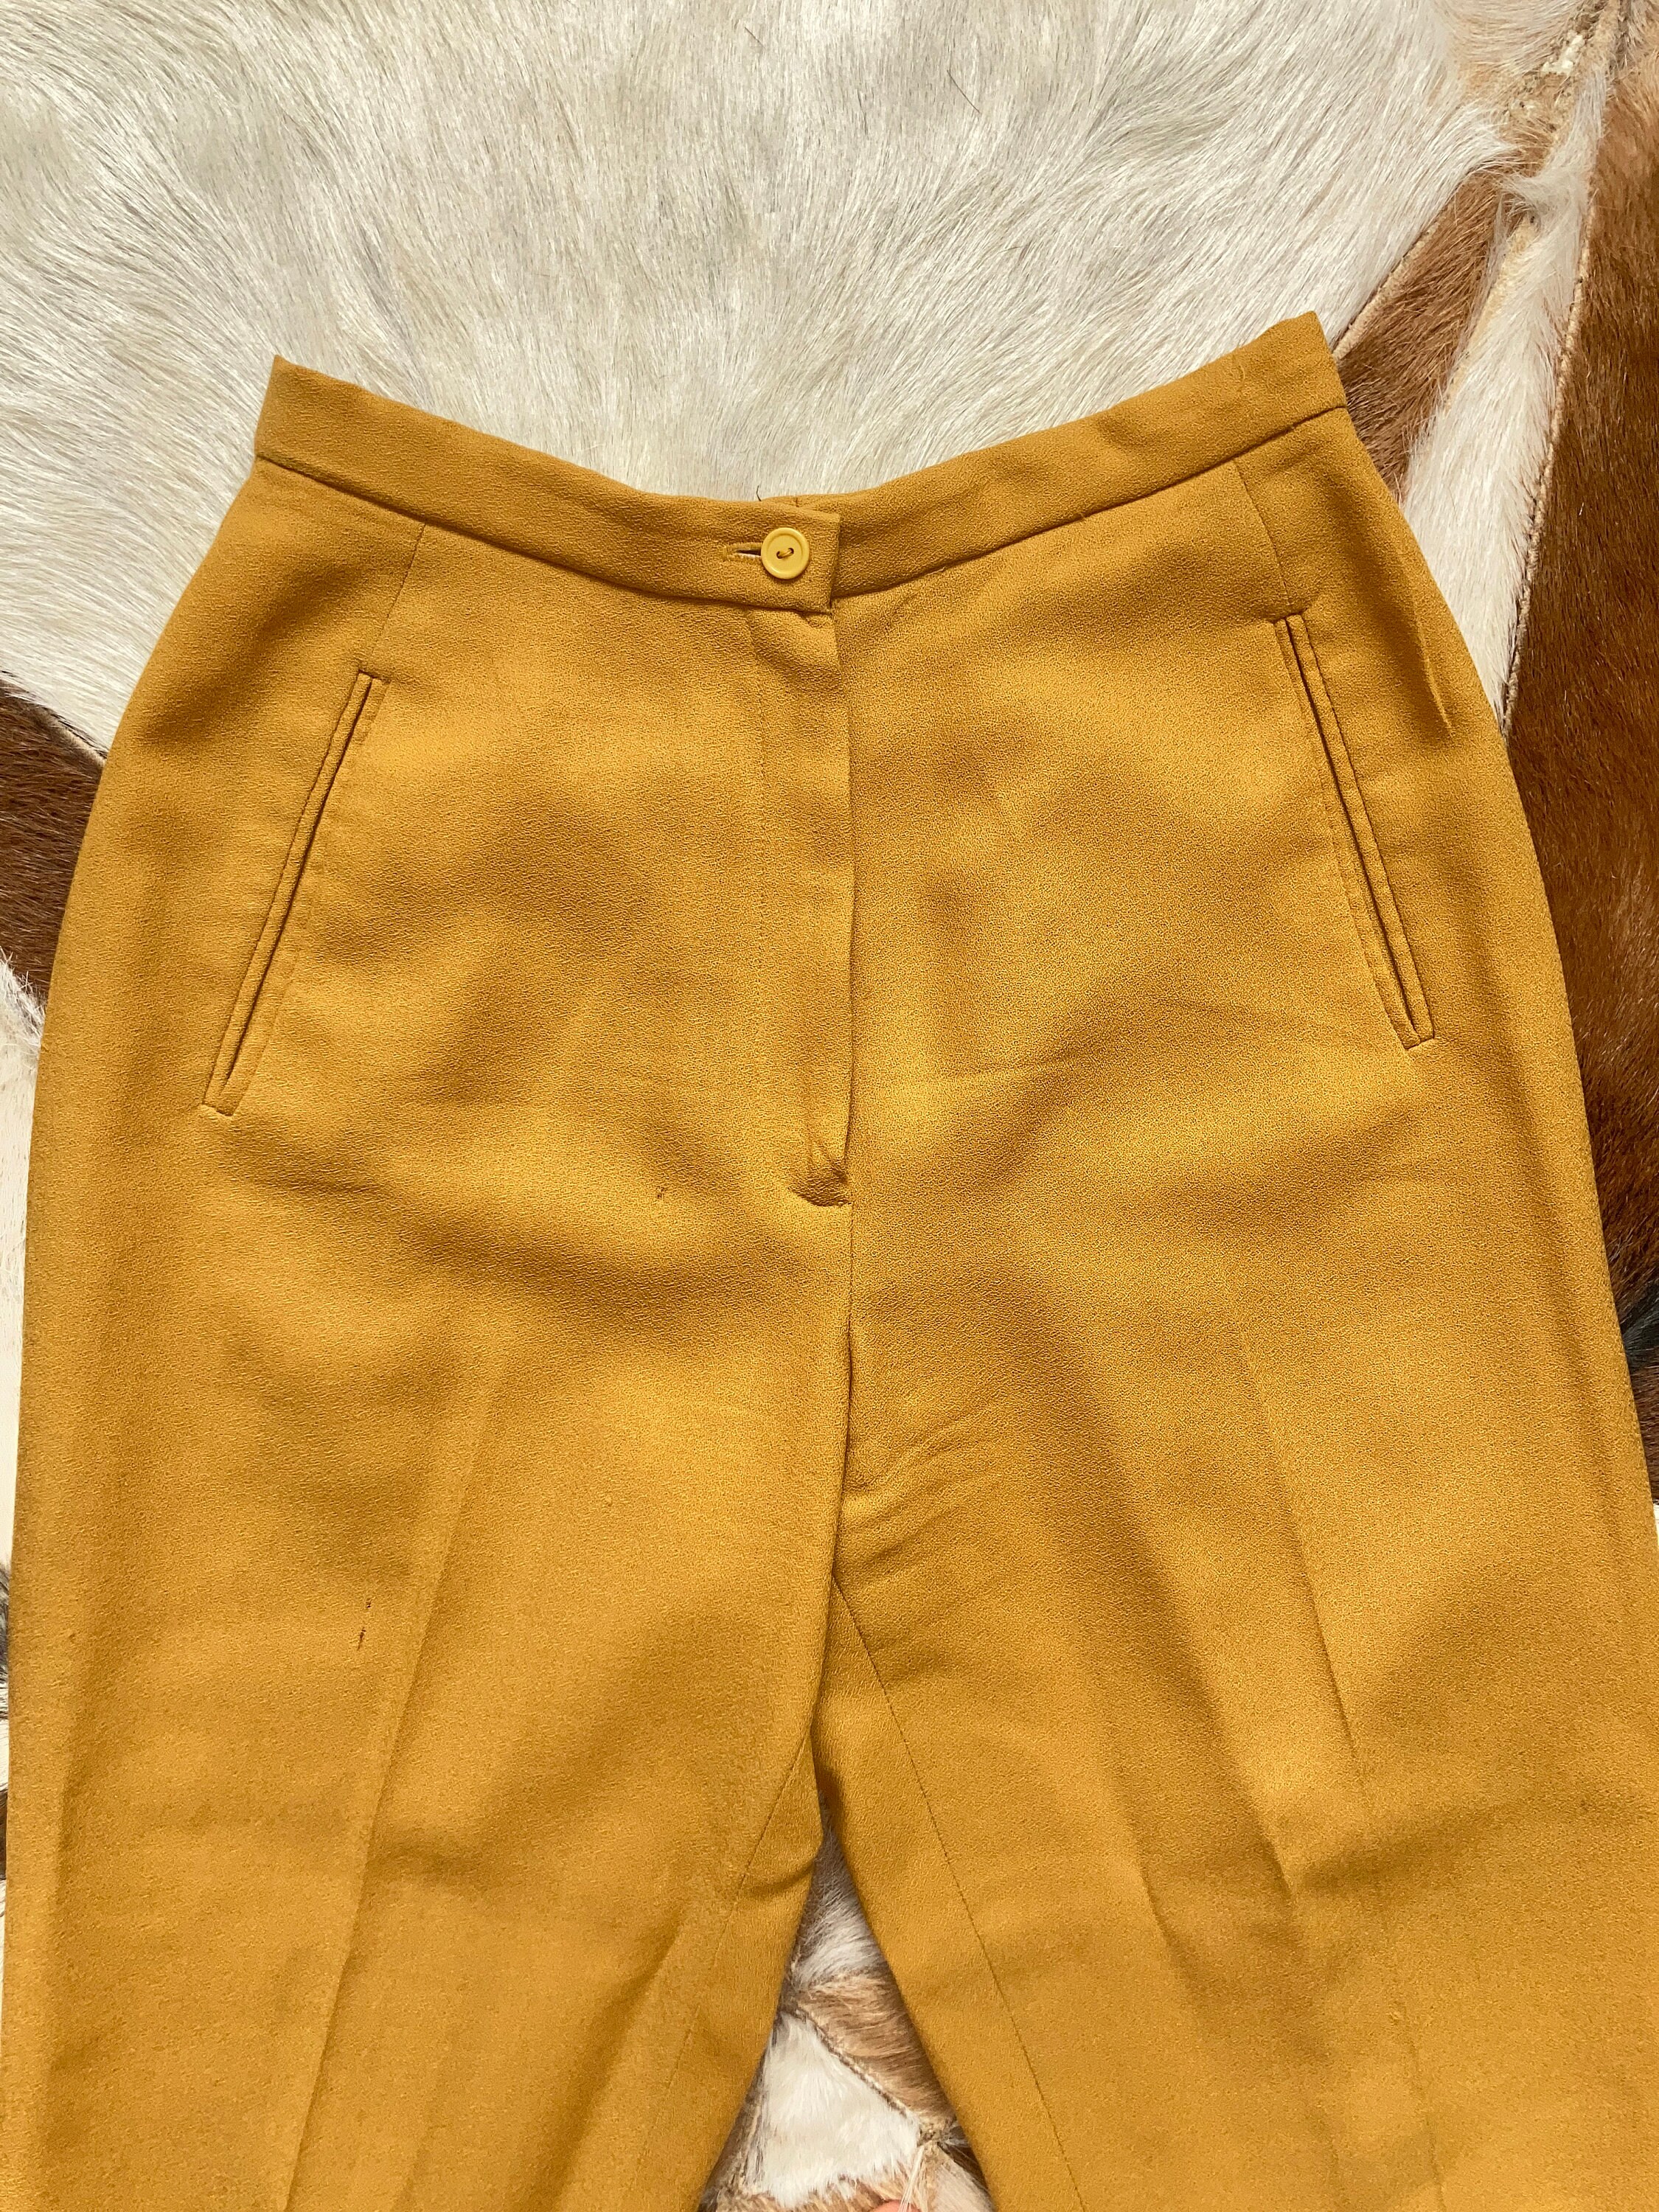 Vintage 80s/1980s Donna Karen Mustard Yellow Lined Pleat Front Pants ...